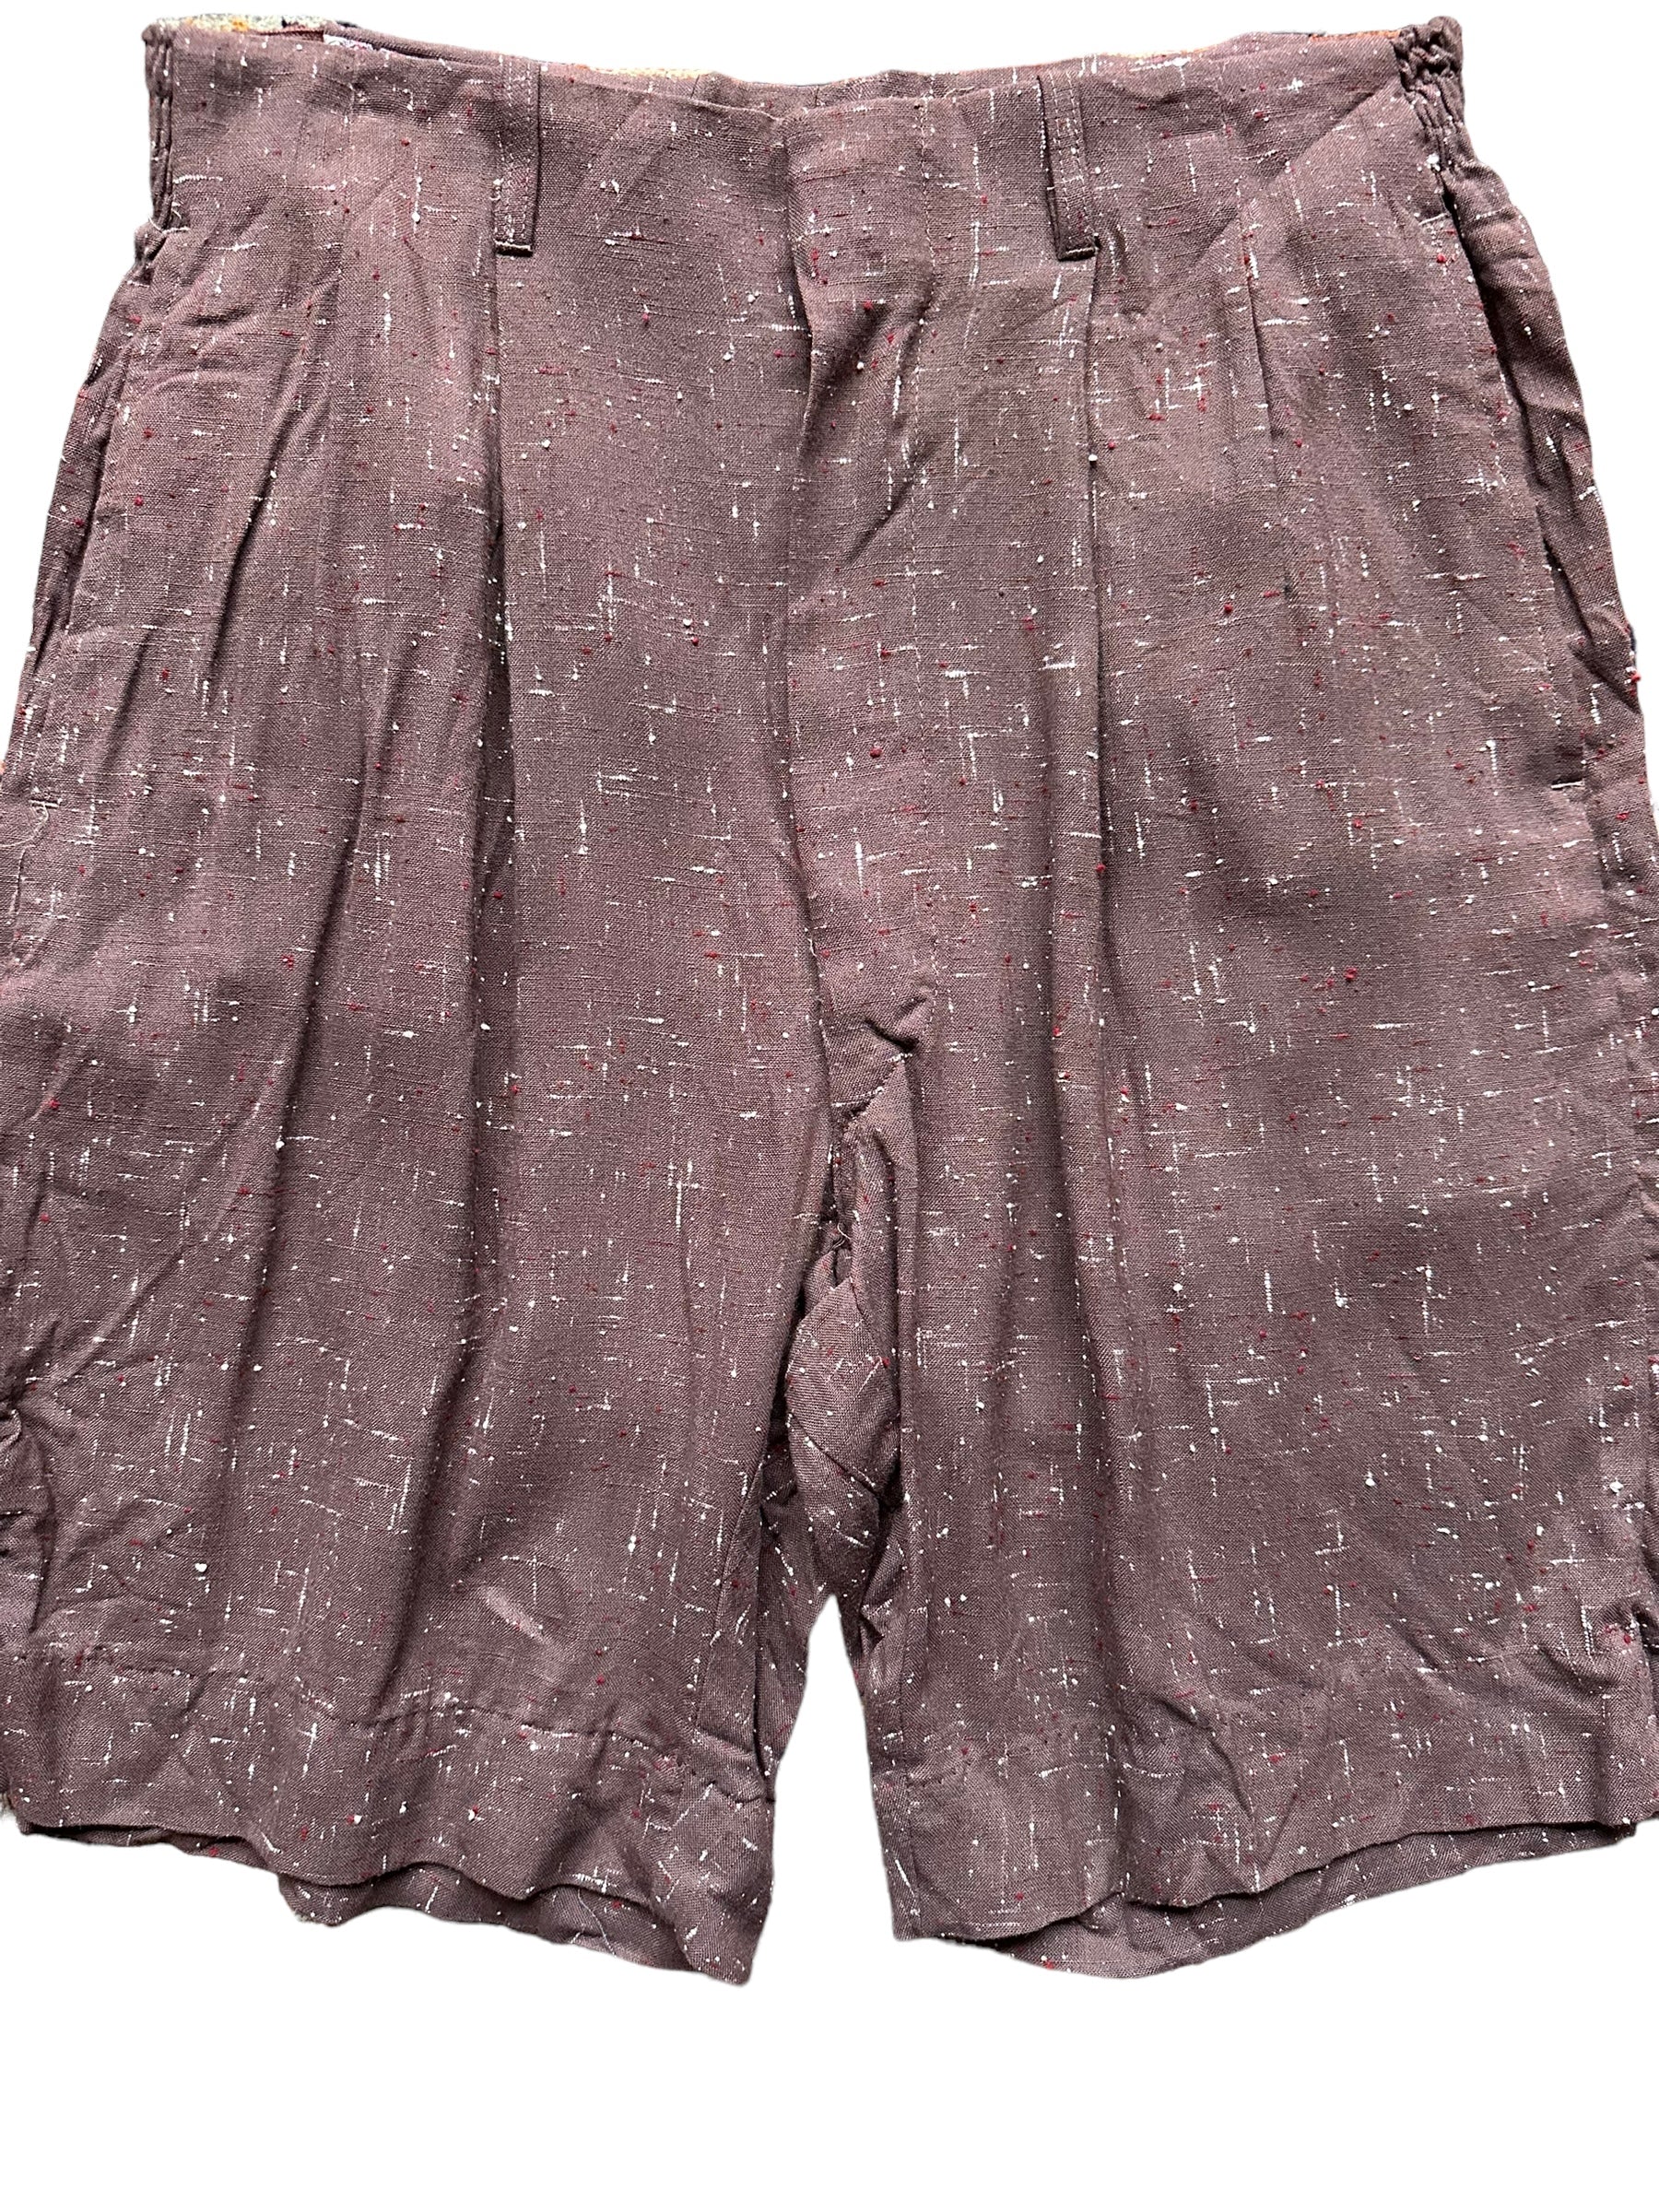 Front Detail on Vintage Atomic Fleck Rayon Shorts W30 |  Barn Owl Vintage Goods | Vintage Shorts Seattle